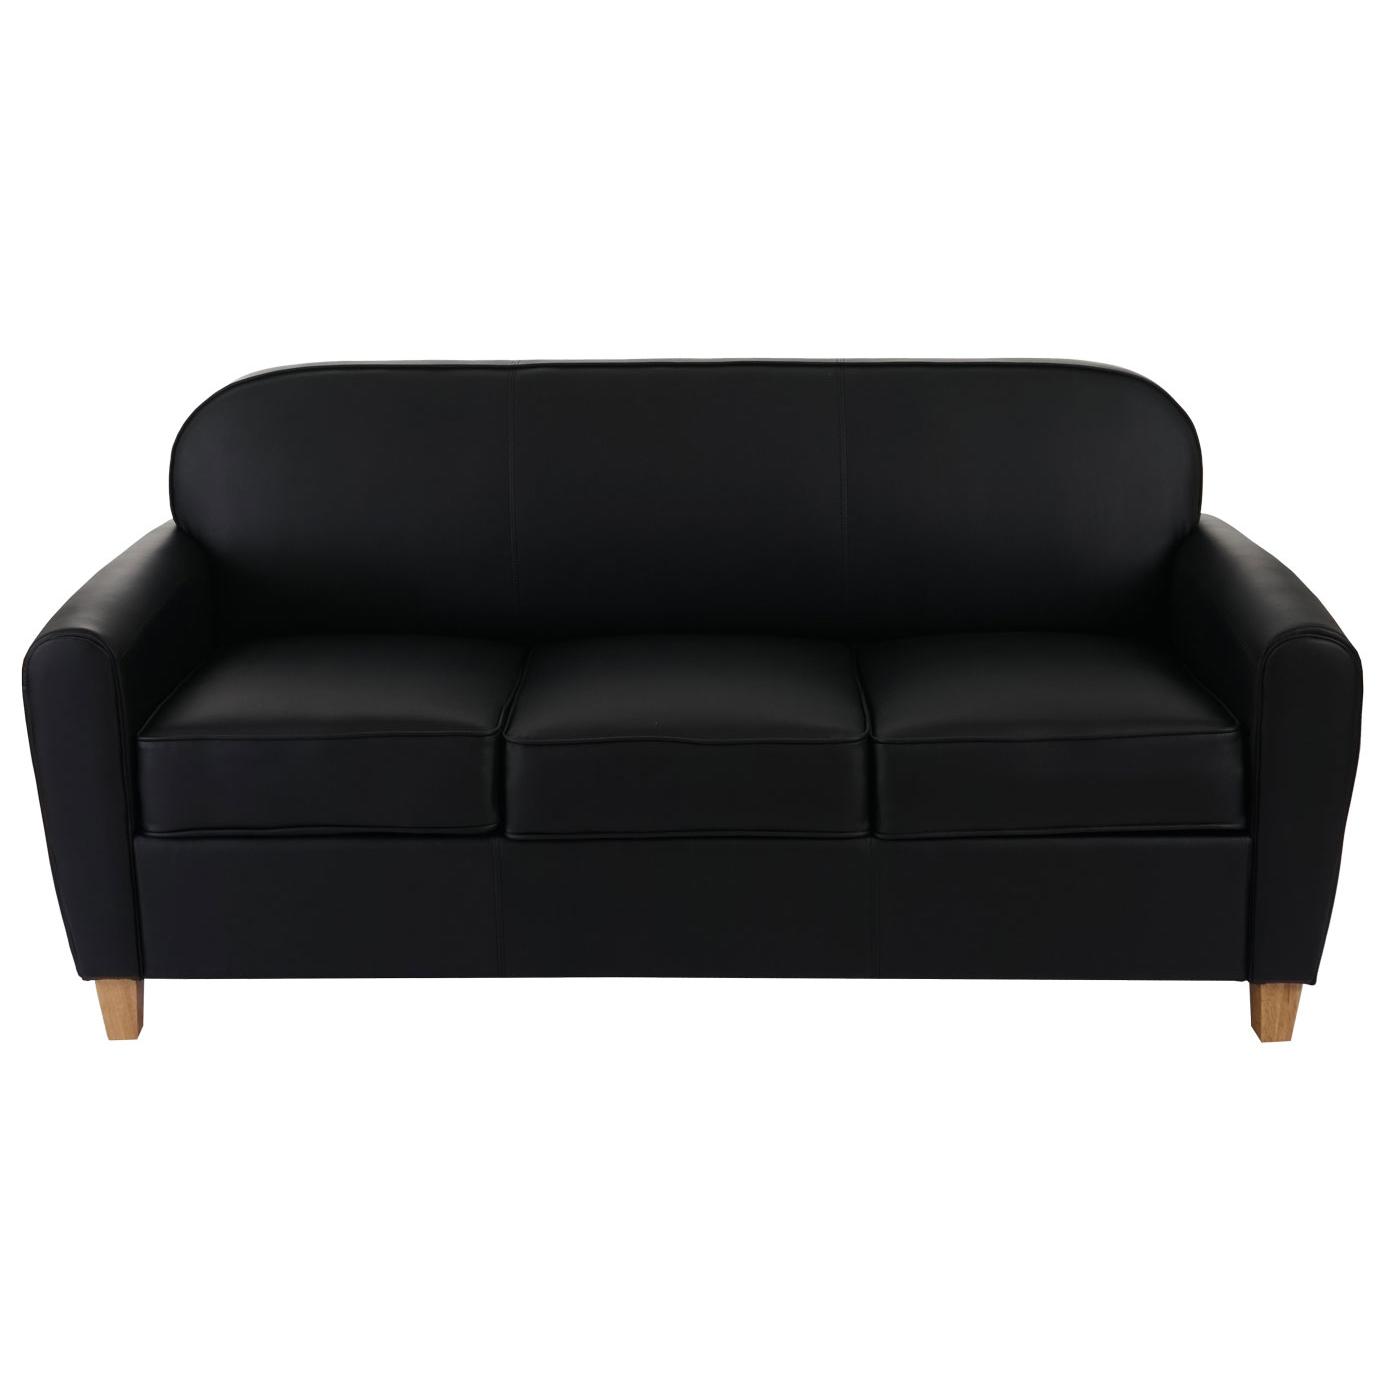 Sofa ARTIS, Dreisitzer. Elegantes Design, bequem und vielseitig, Lederbezug, Farbe Schwarz